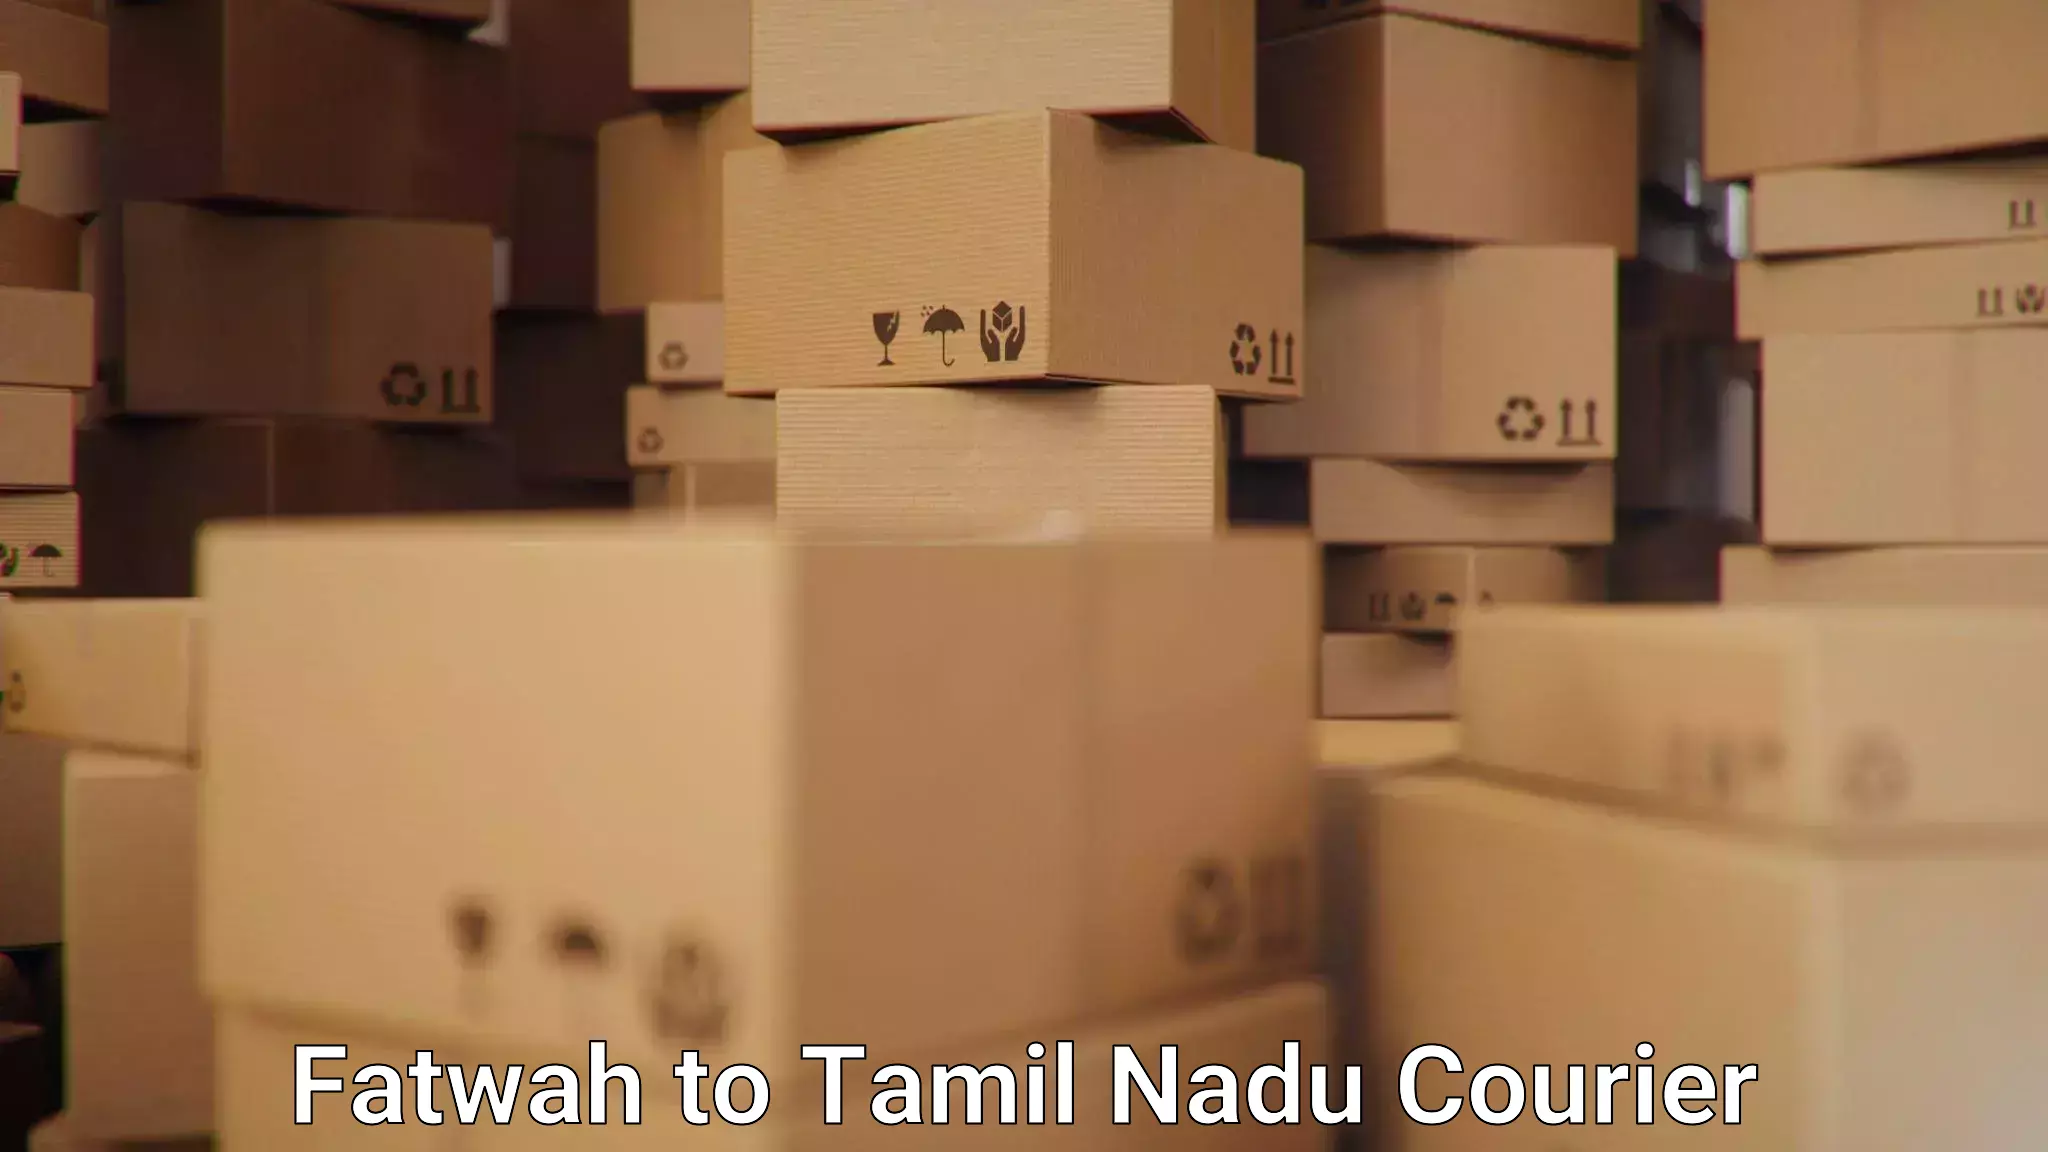 Speedy delivery service Fatwah to Tamil Nadu